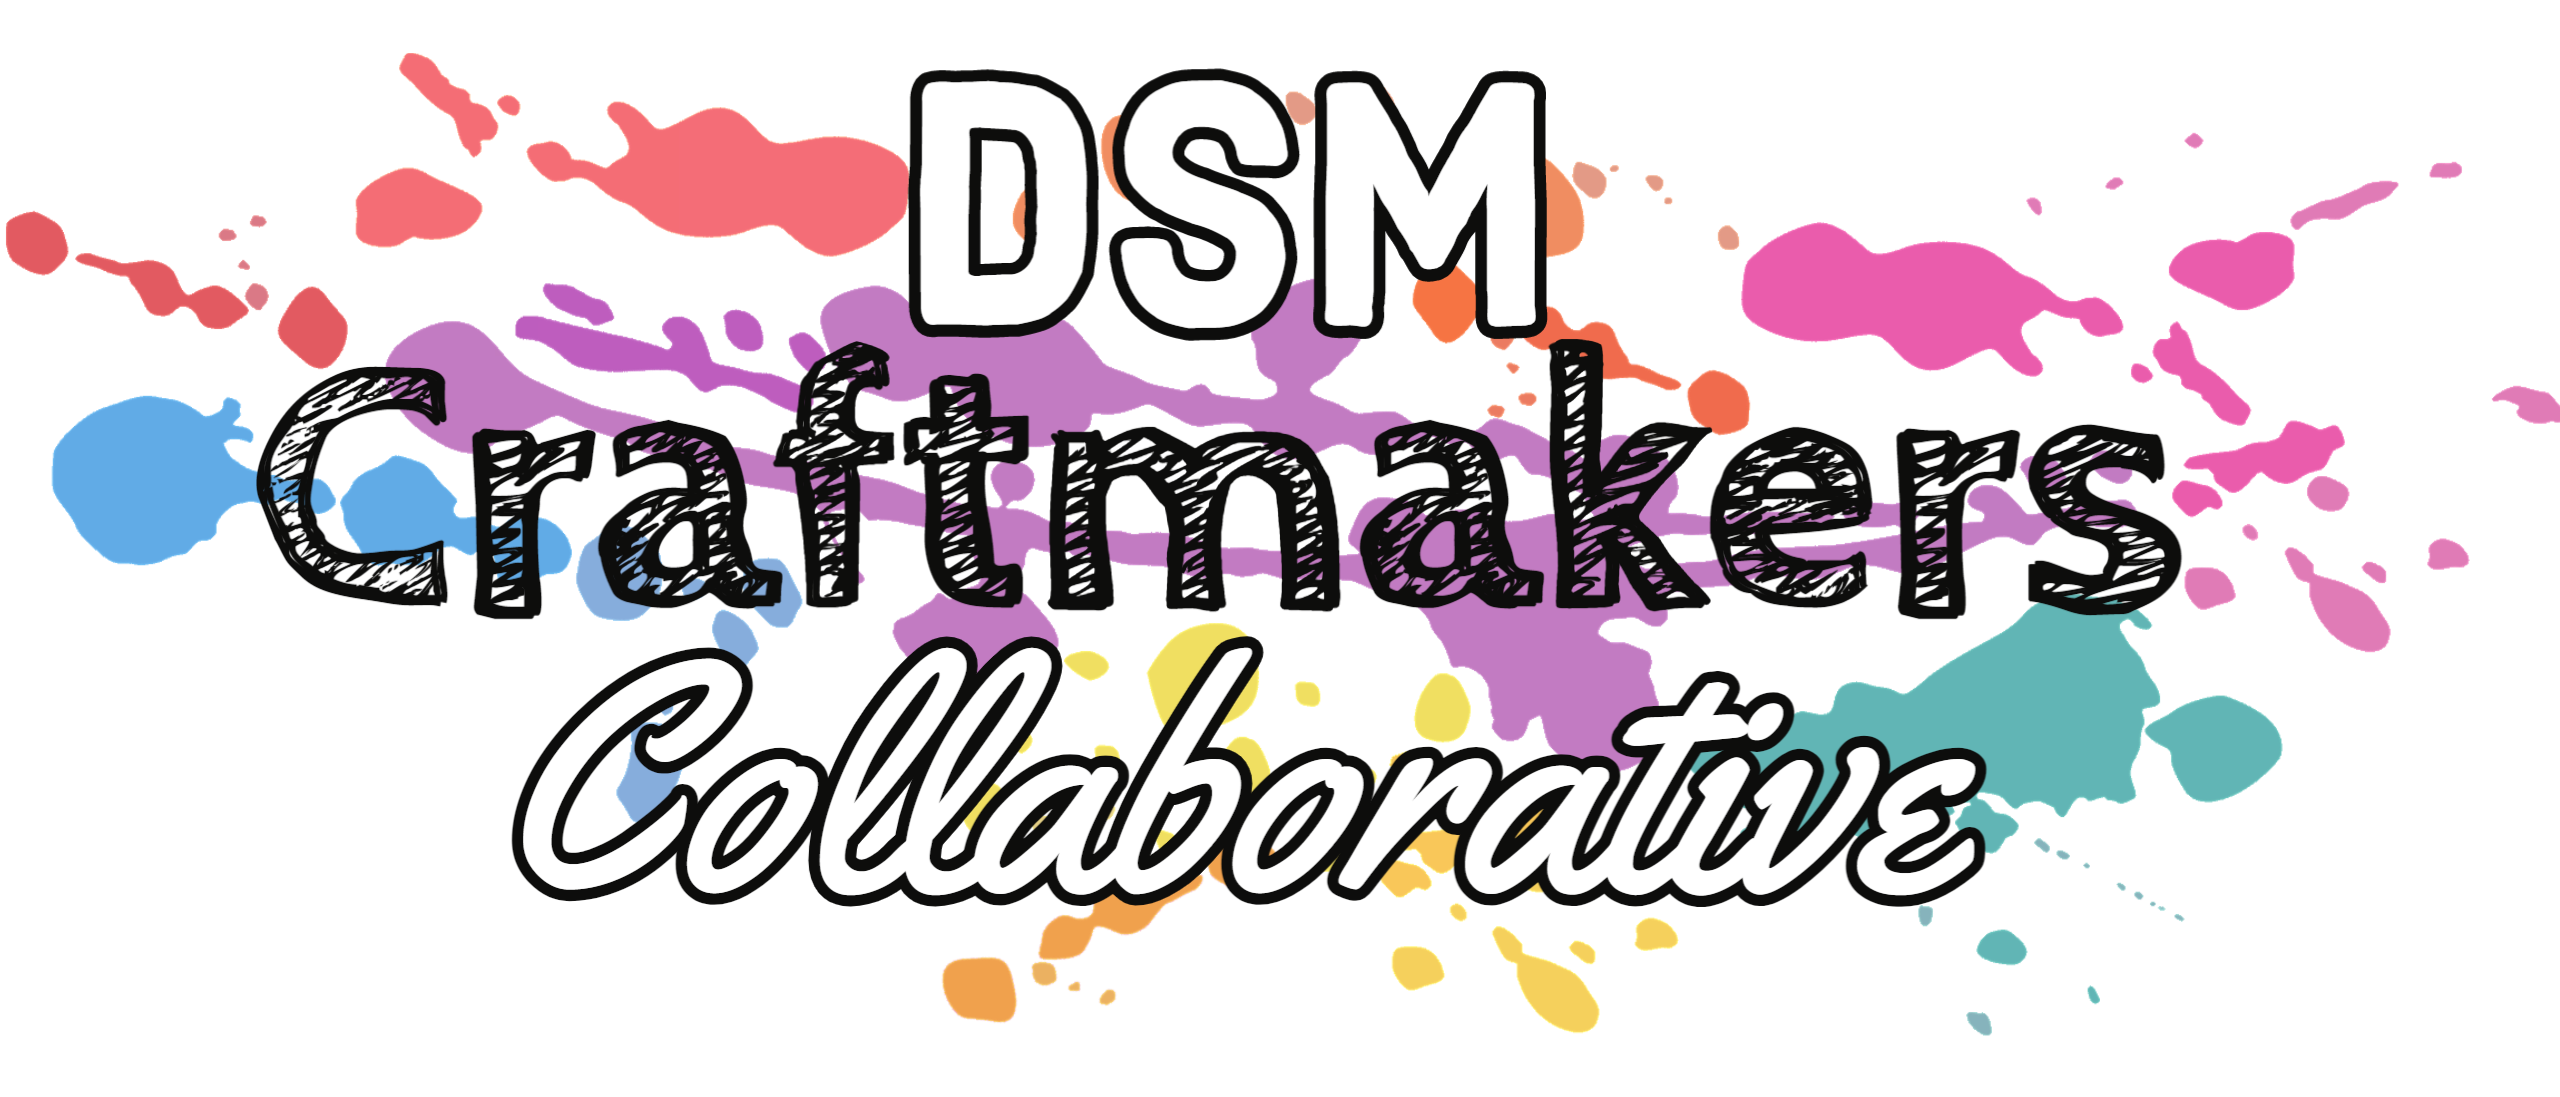 DSM Craftmakers Collaborative